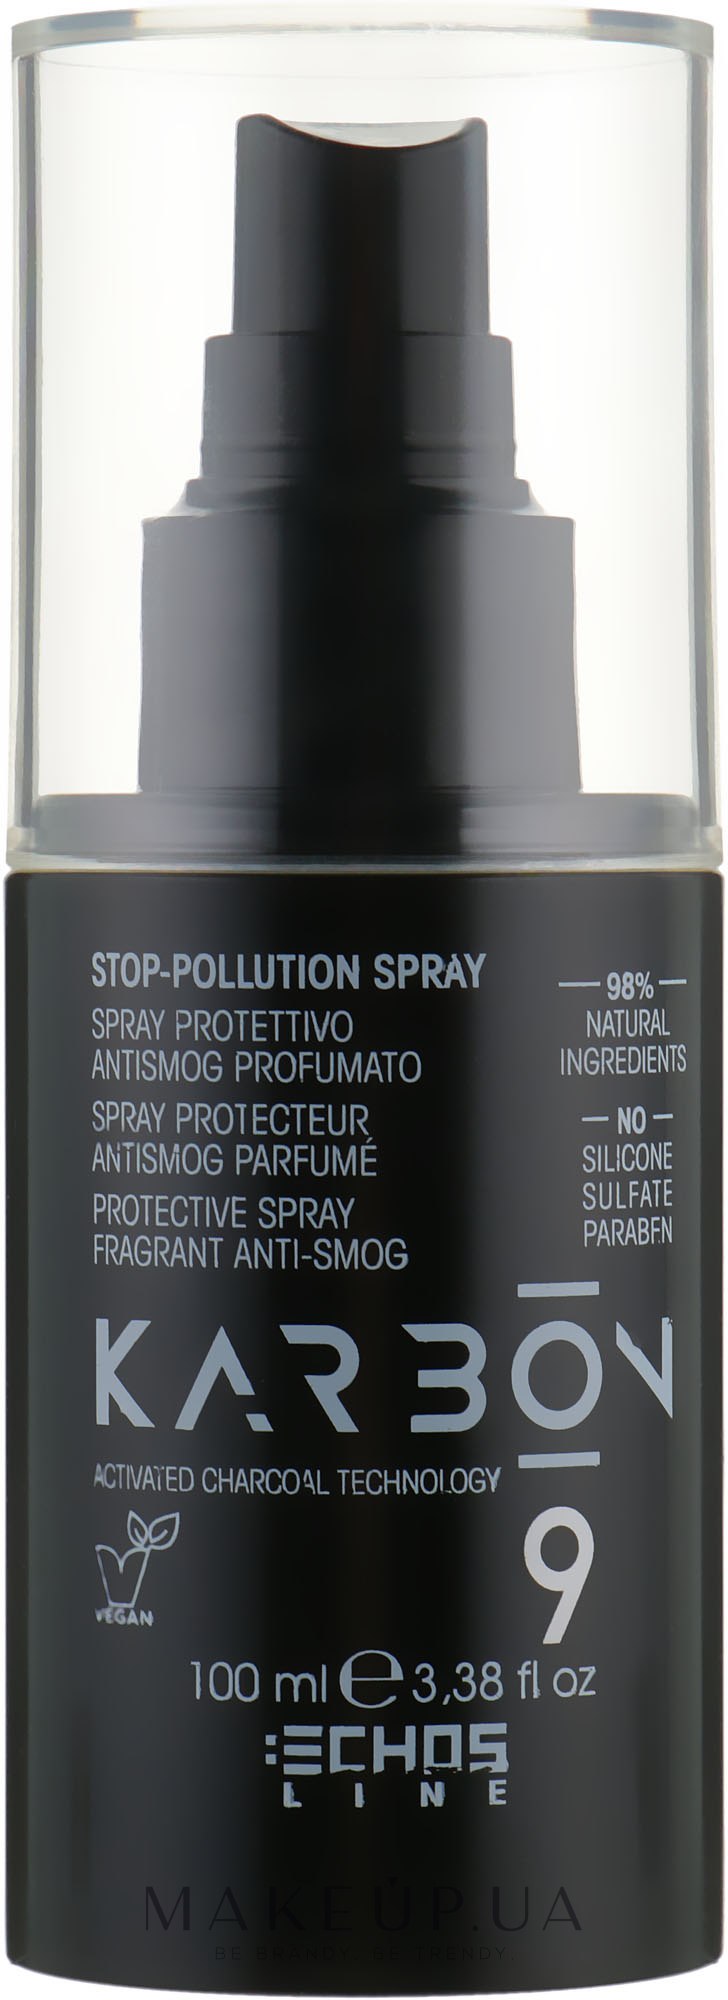 Защитный спрей анти-смог - Echosline Karbon 9 Charcoal Stop-Pollution Spray  — фото 100ml